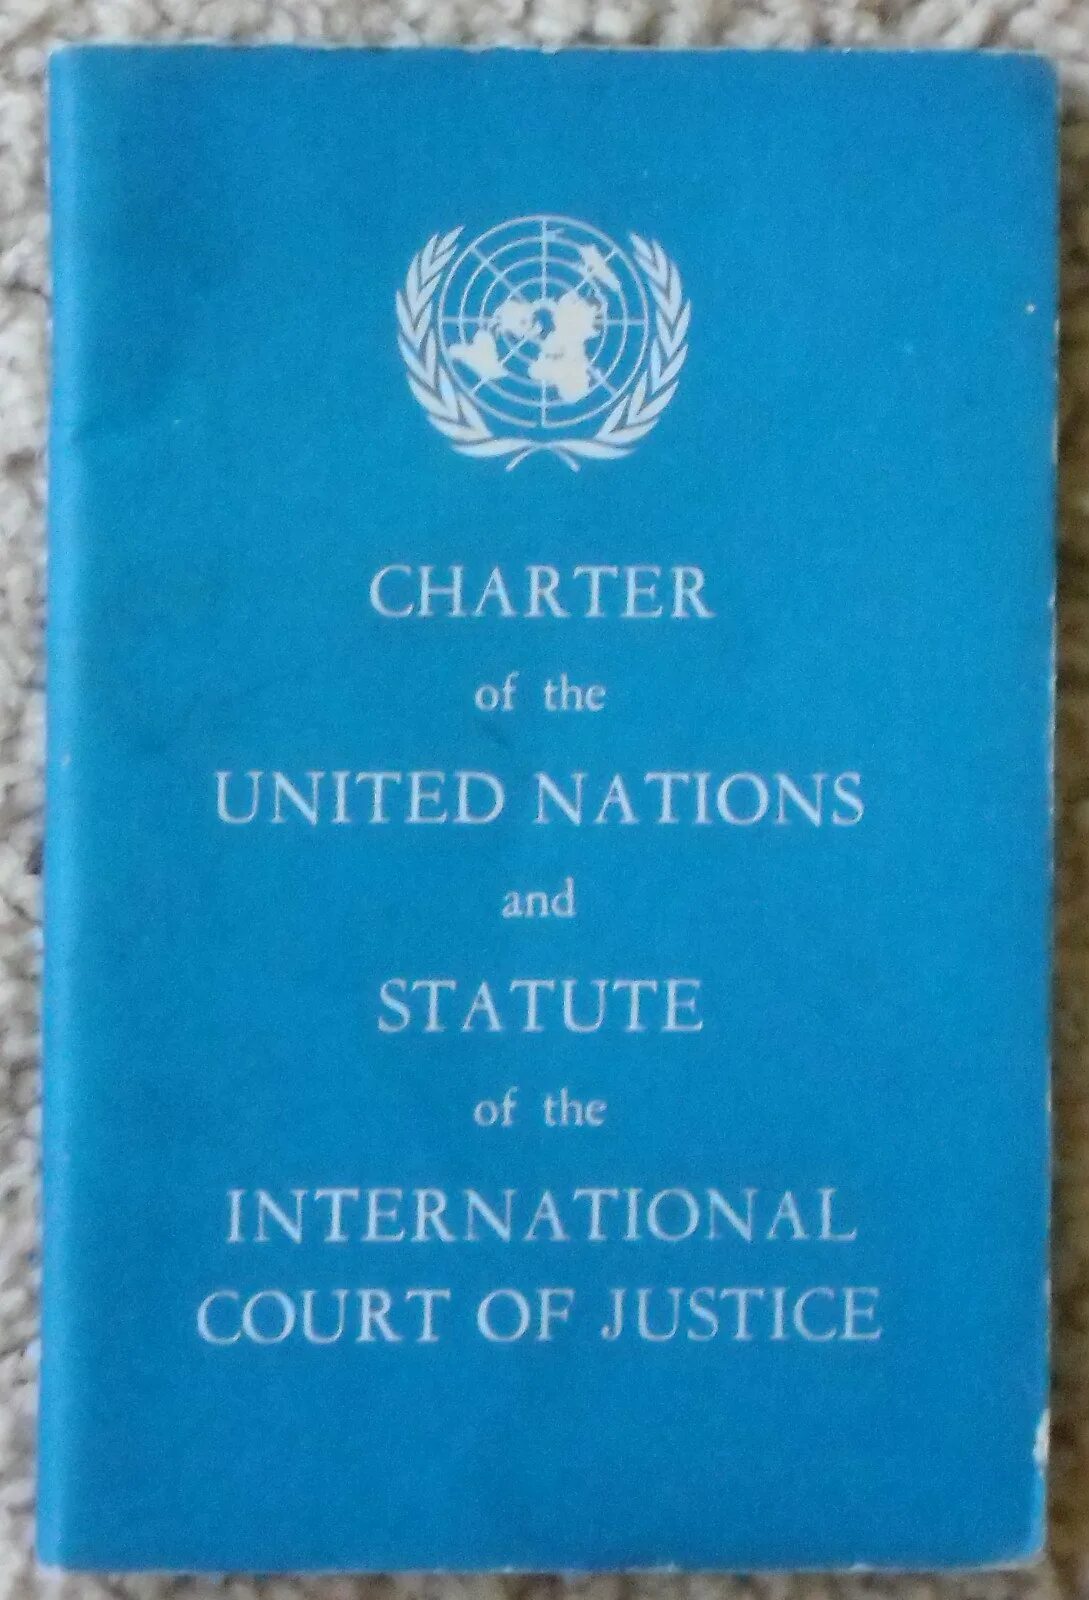 1 устав оон. Устав организации Объединенных наций 1945 г. Устав ООН книга. Статут международного суда ООН. Устав международного суда ООН.